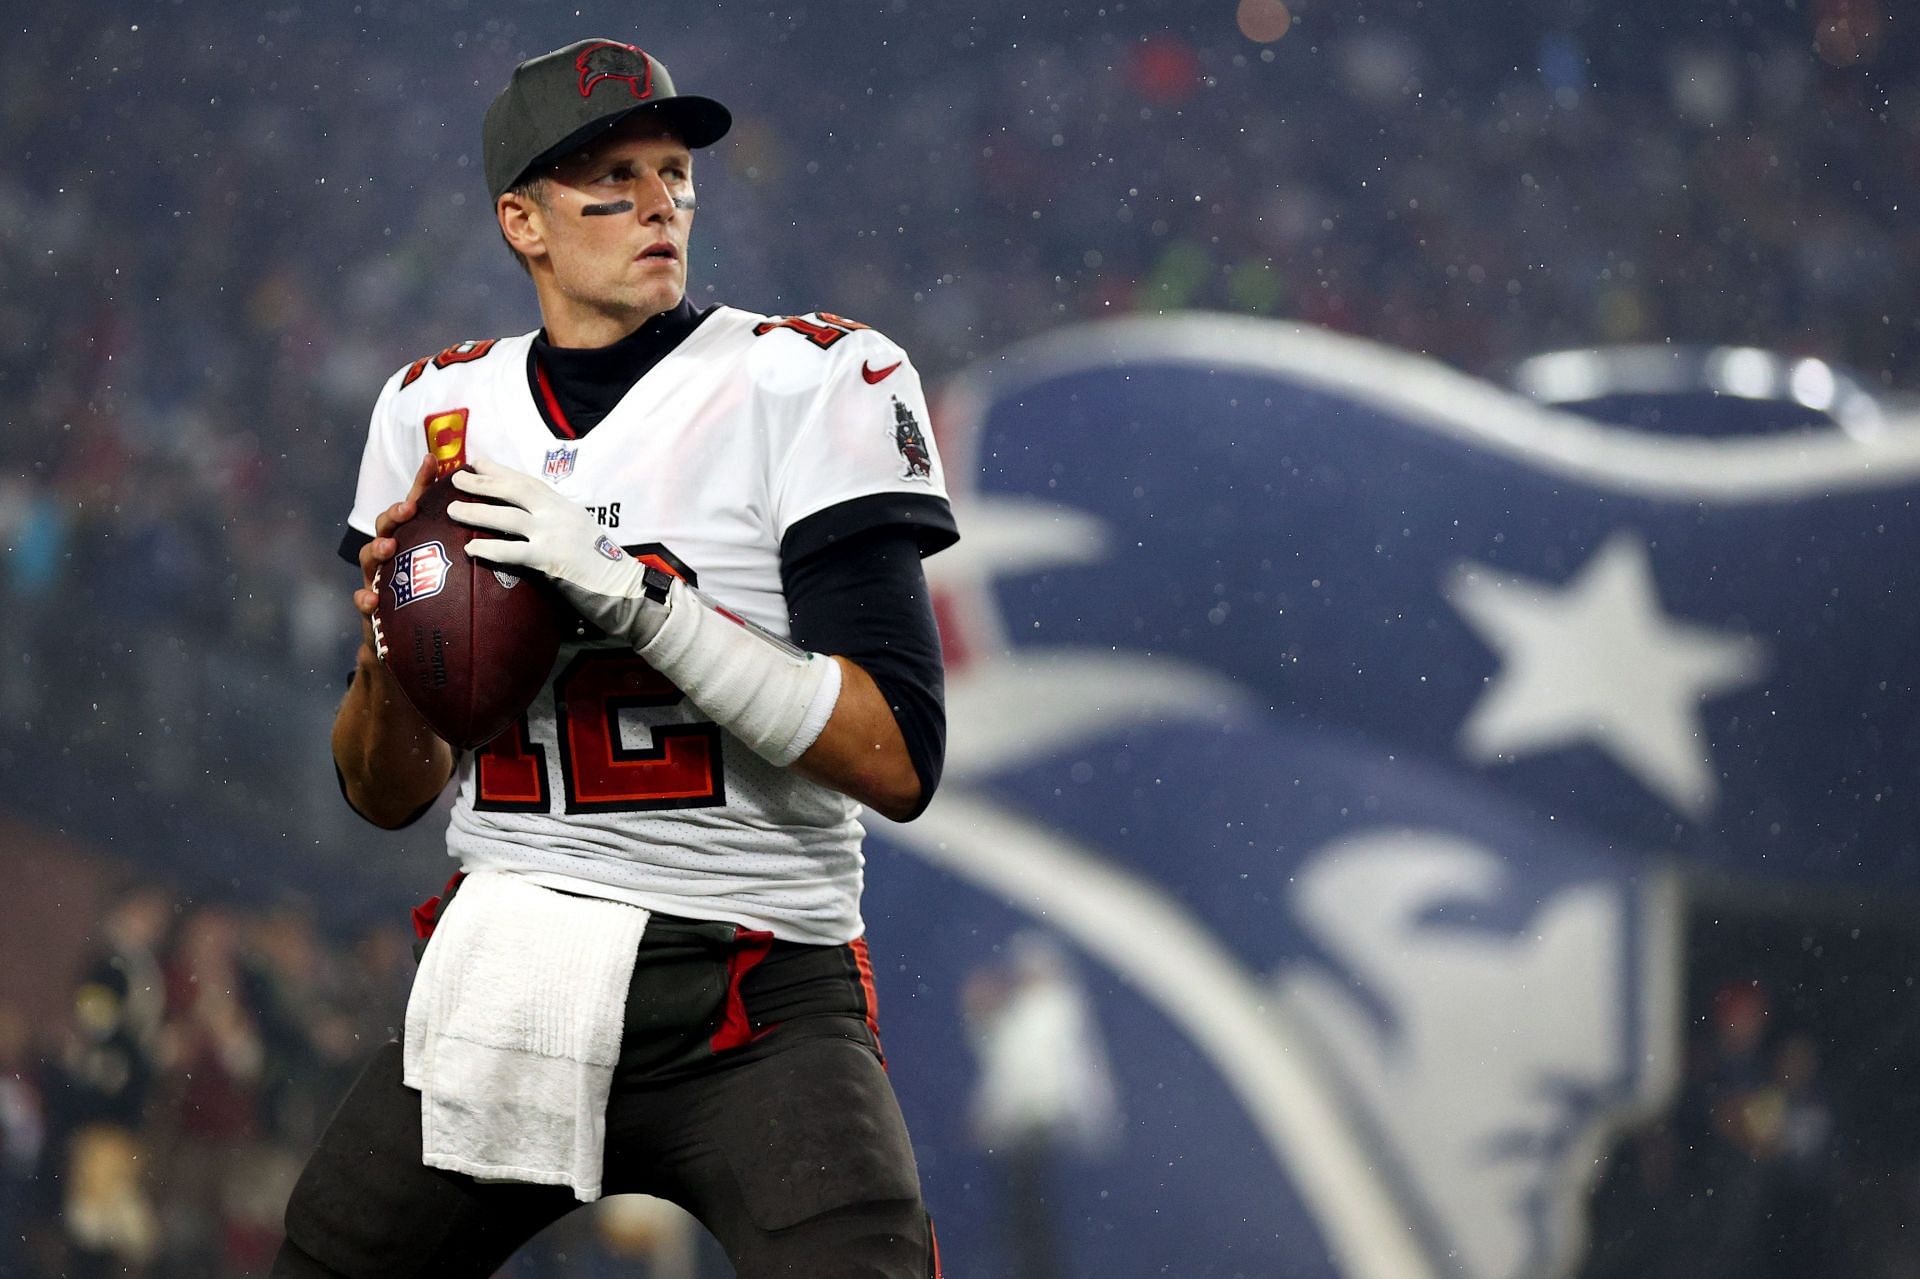 New England Patriots to honor Tom Brady at the 2023 season opener at  Gillette Stadium – Boston 25 News